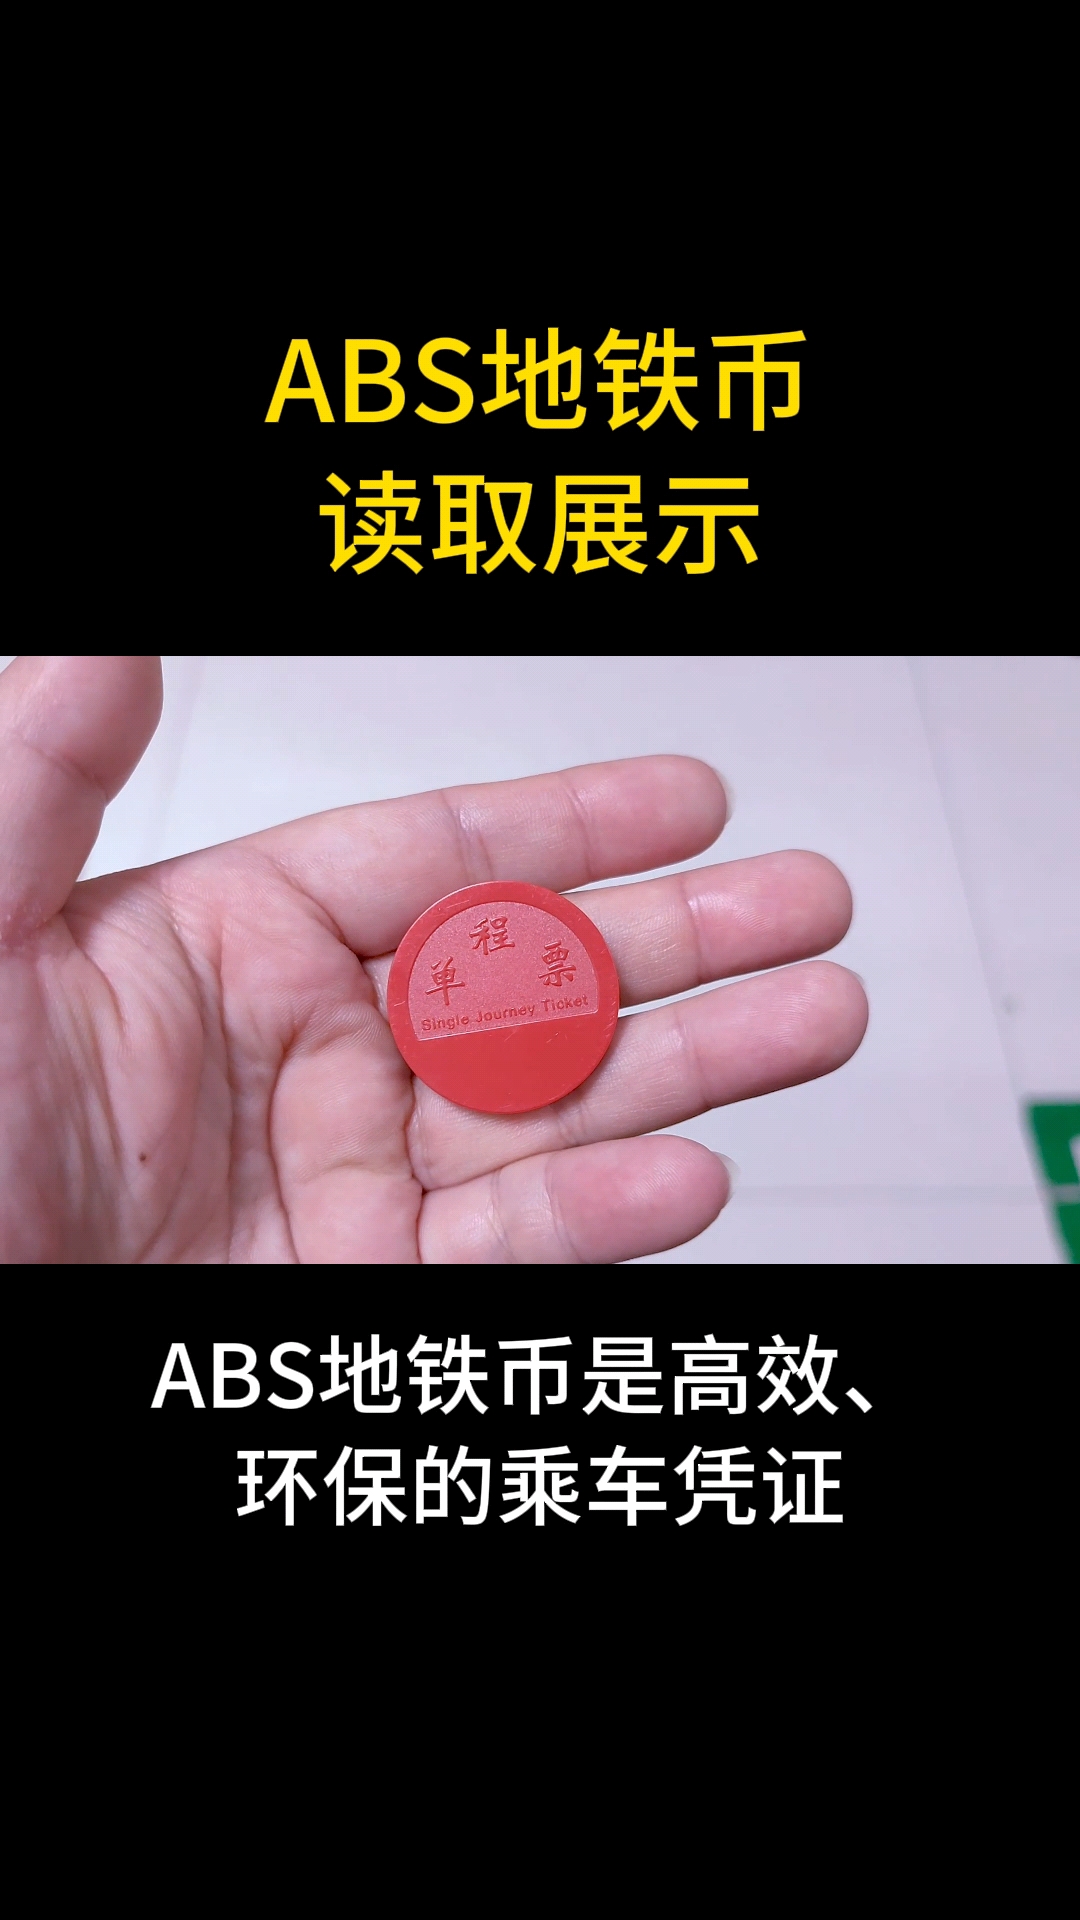 ABS地鐵幣讀取展示 #ABS抗金屬標簽 #RFID #rfid標簽 